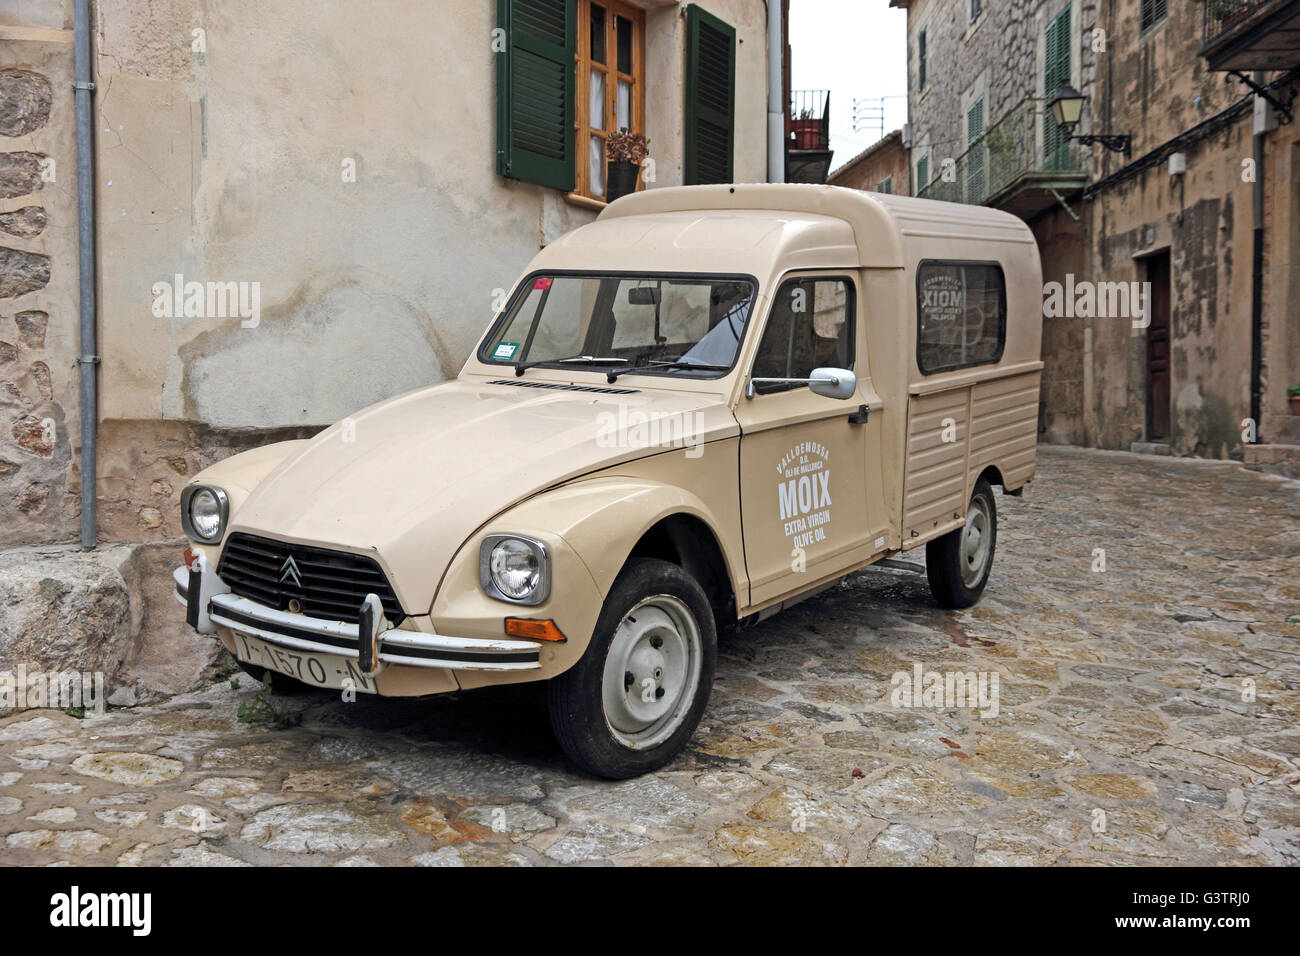 Old Citroen Acadiane Van carrying Moix olive oil advertising, Valldemossa, Mallorca Stock Photo